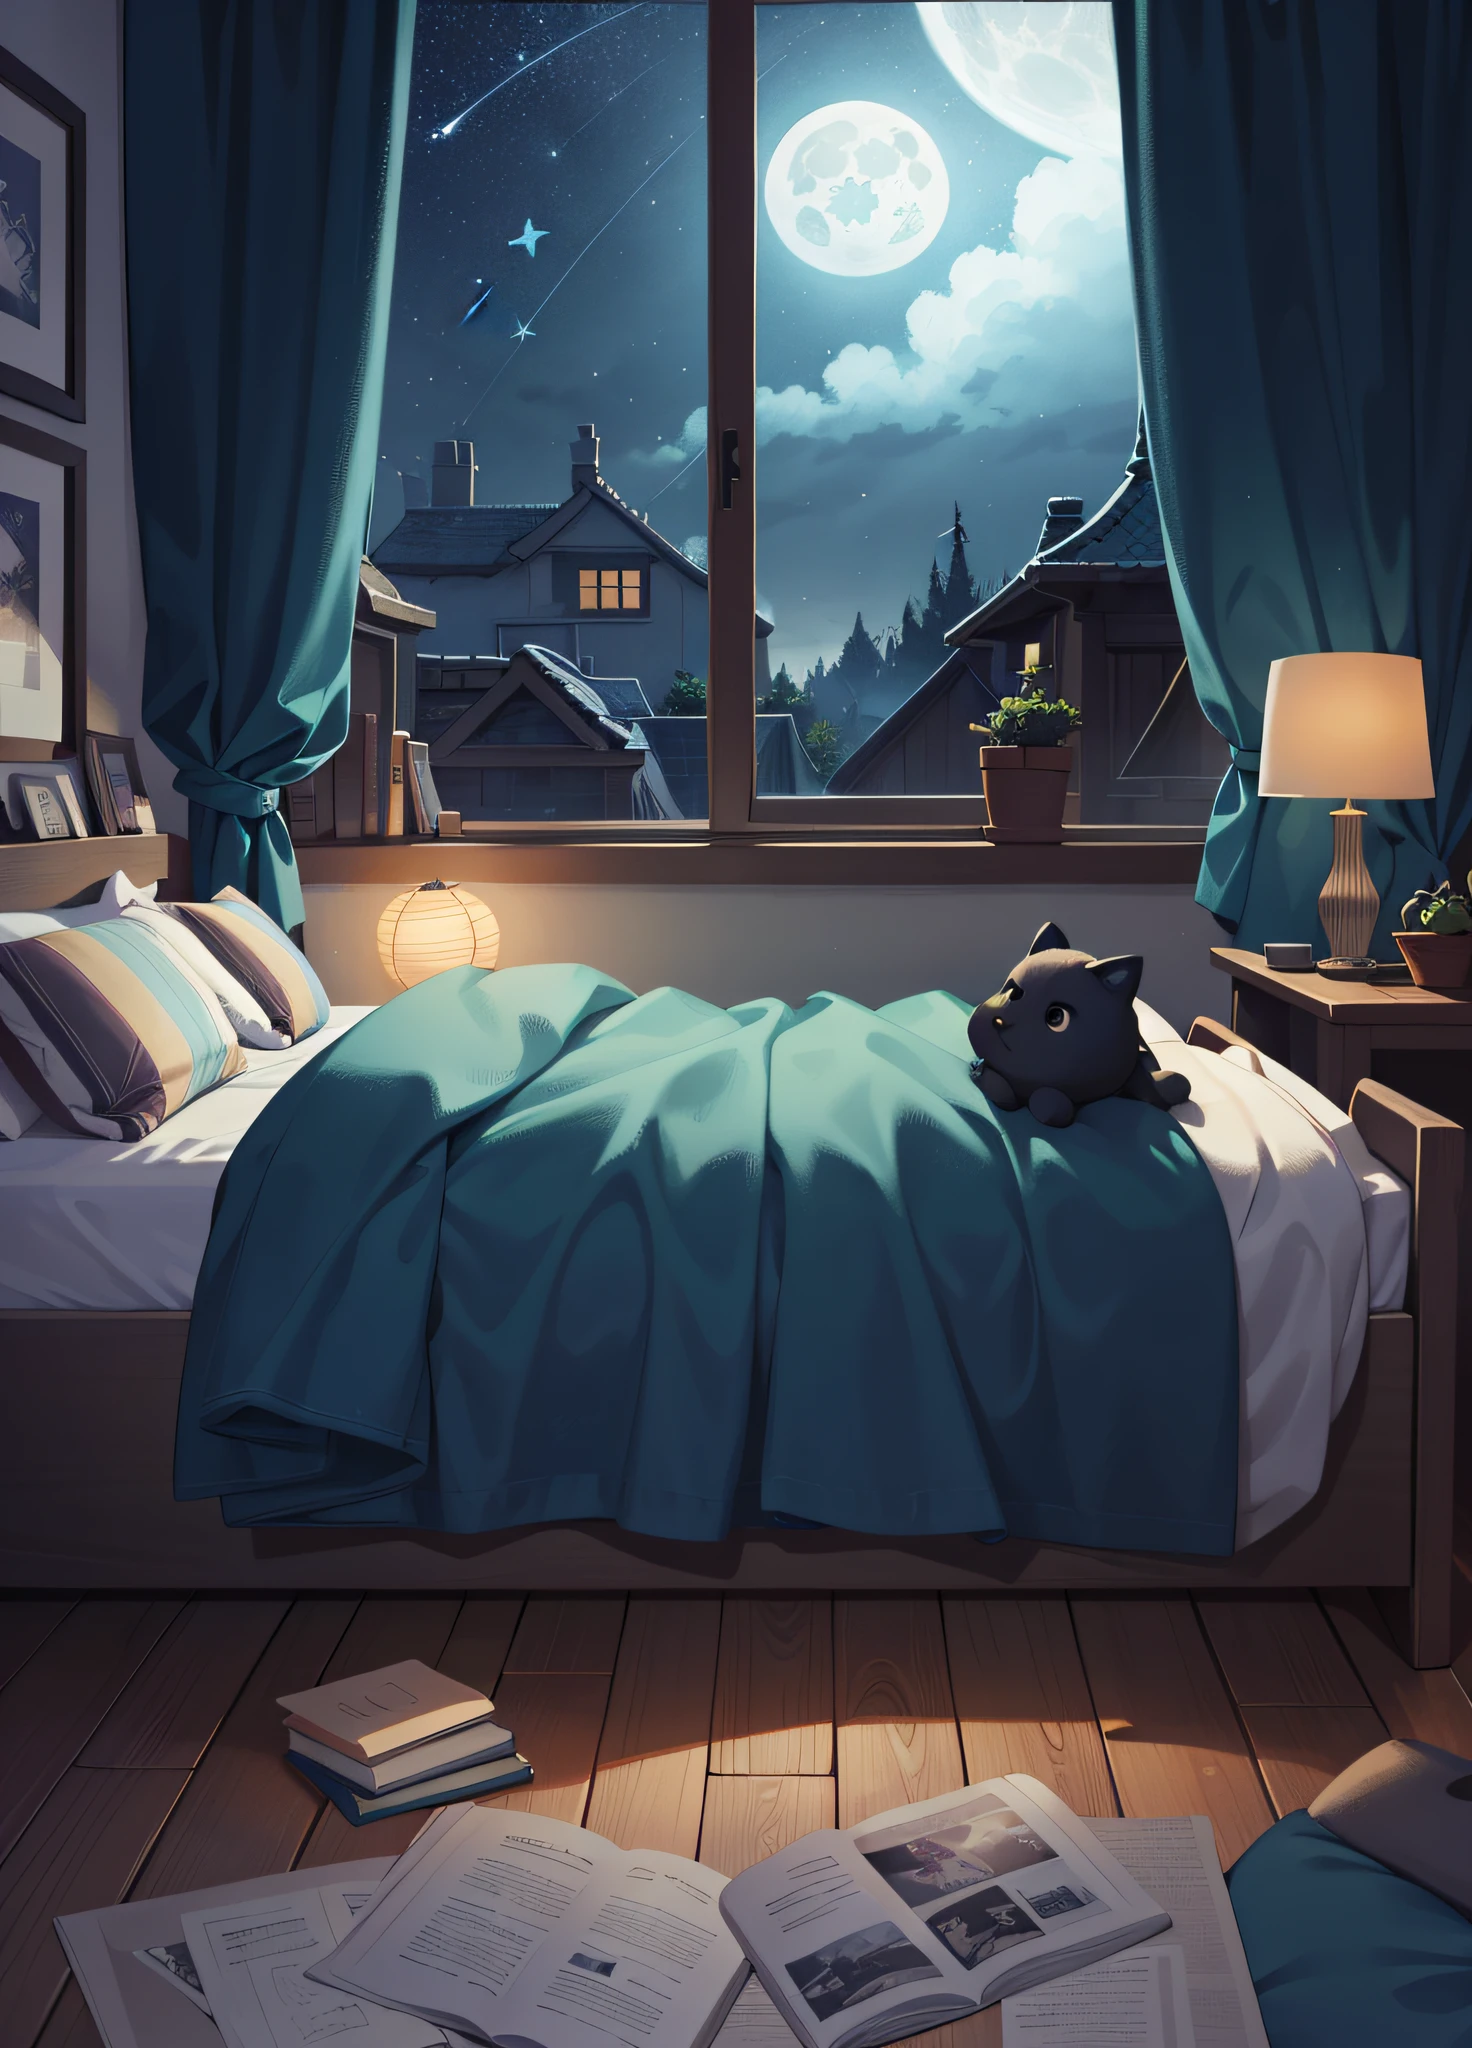 A bedroom window with 夜空, 滿月與天空中的星星插畫 (插圖8K), (最好的品質) (錯綜複雜的細節) (8K) (夜空)